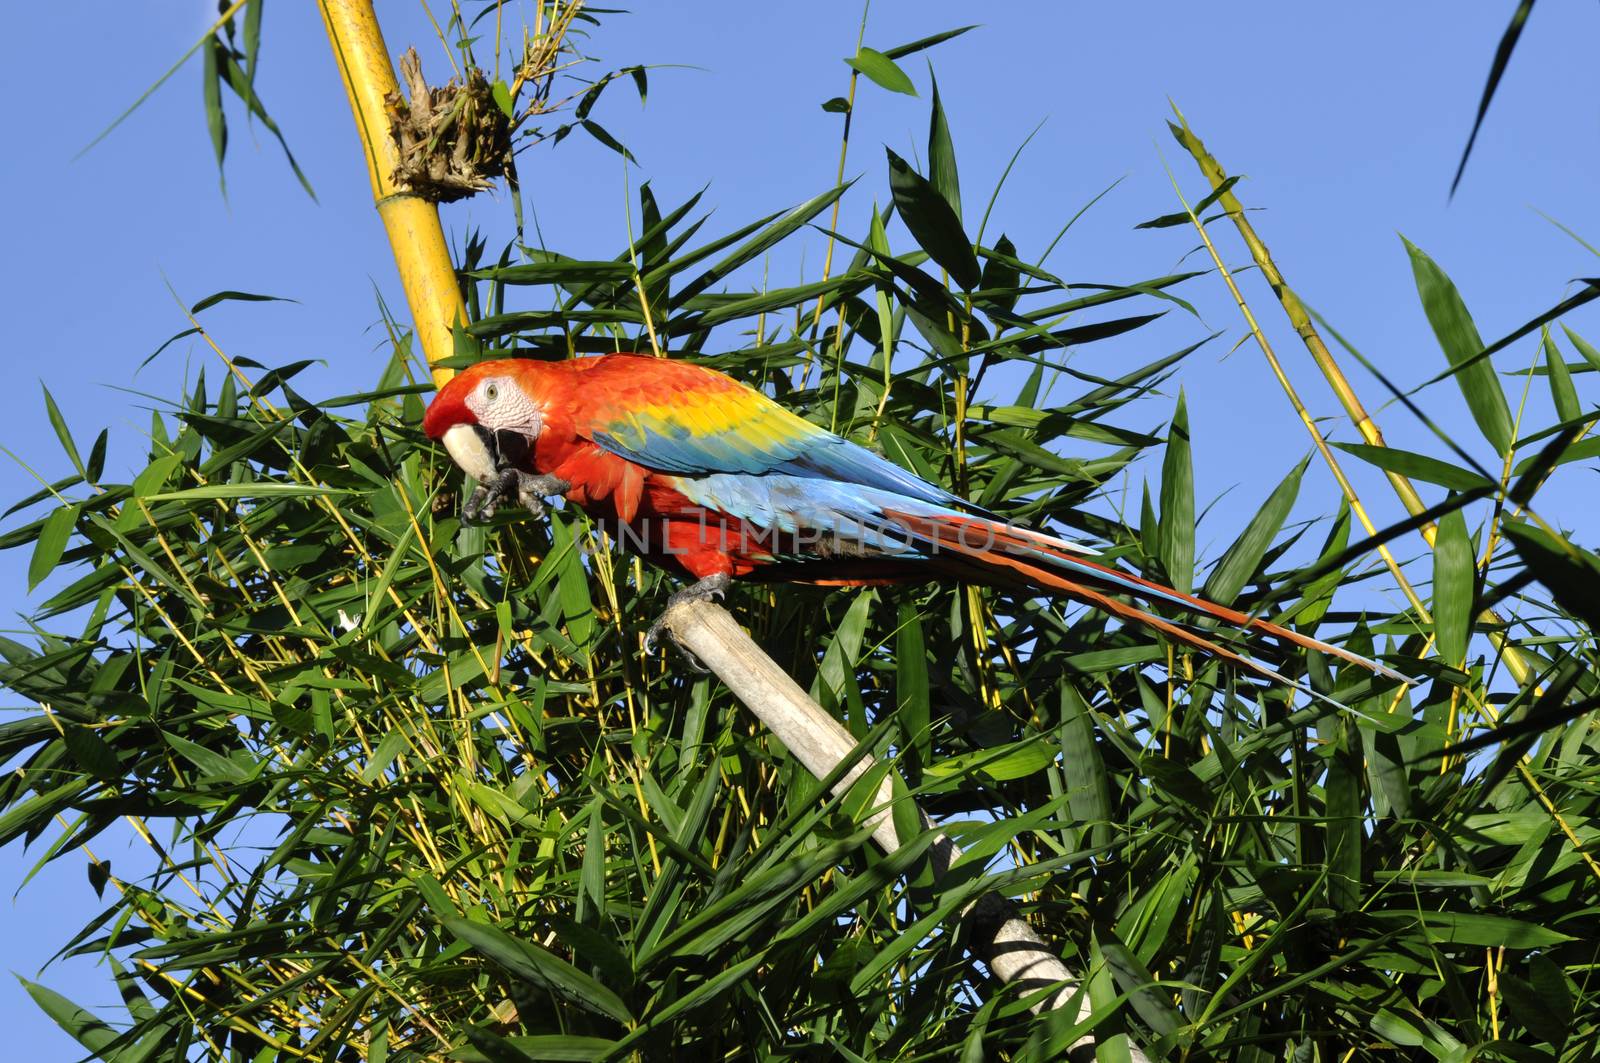 Amazonian Macaw - Ara ararauna in front of a blue sky